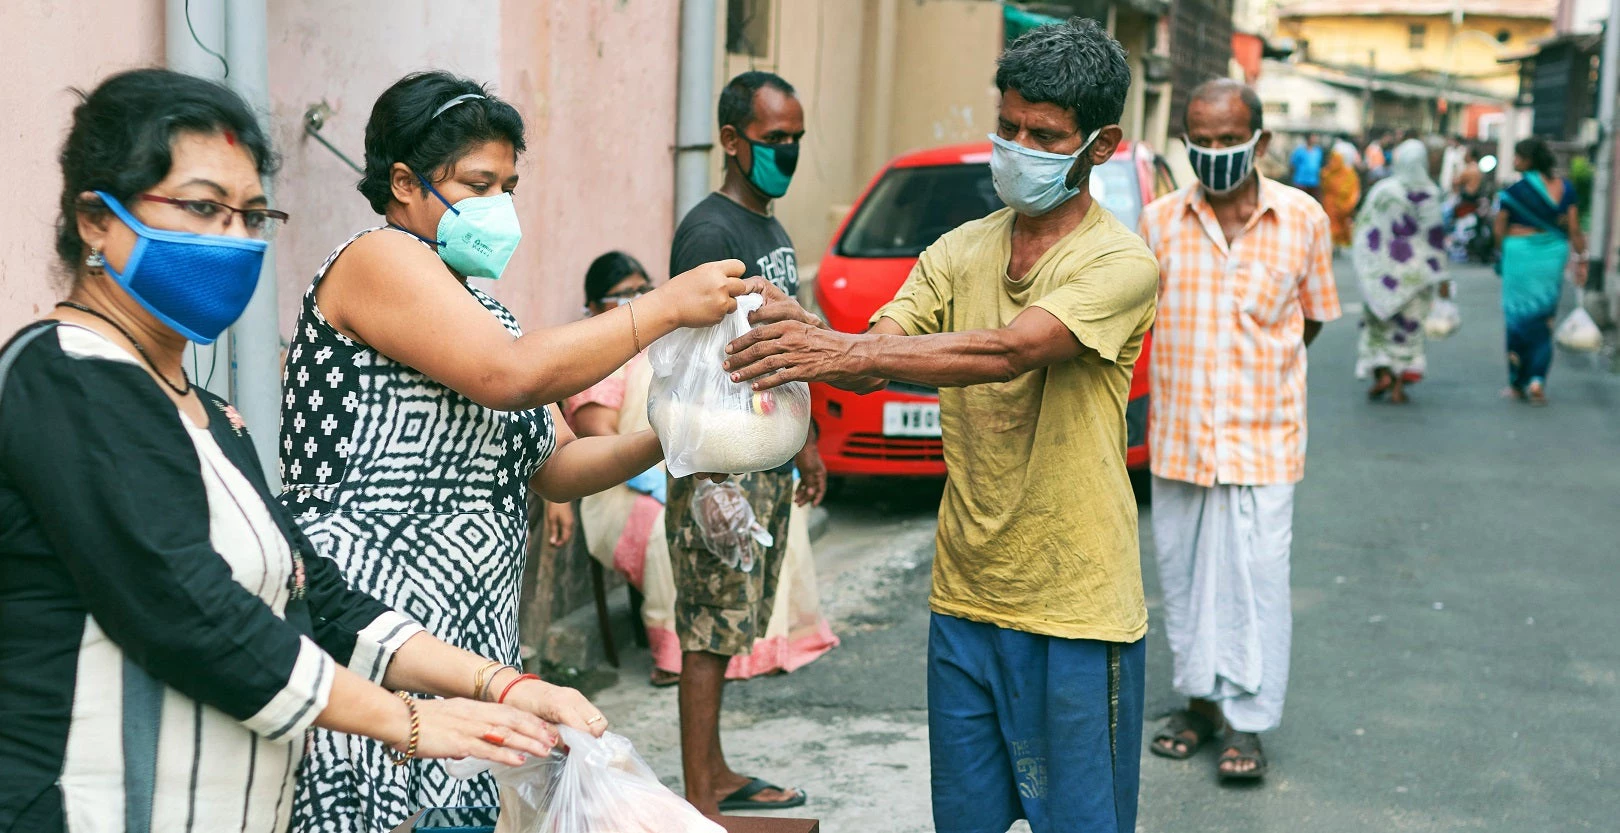 Volunteers distribute grocery items to people in need in Kolkata, India. Photo: © suprabhat/Shutterstock